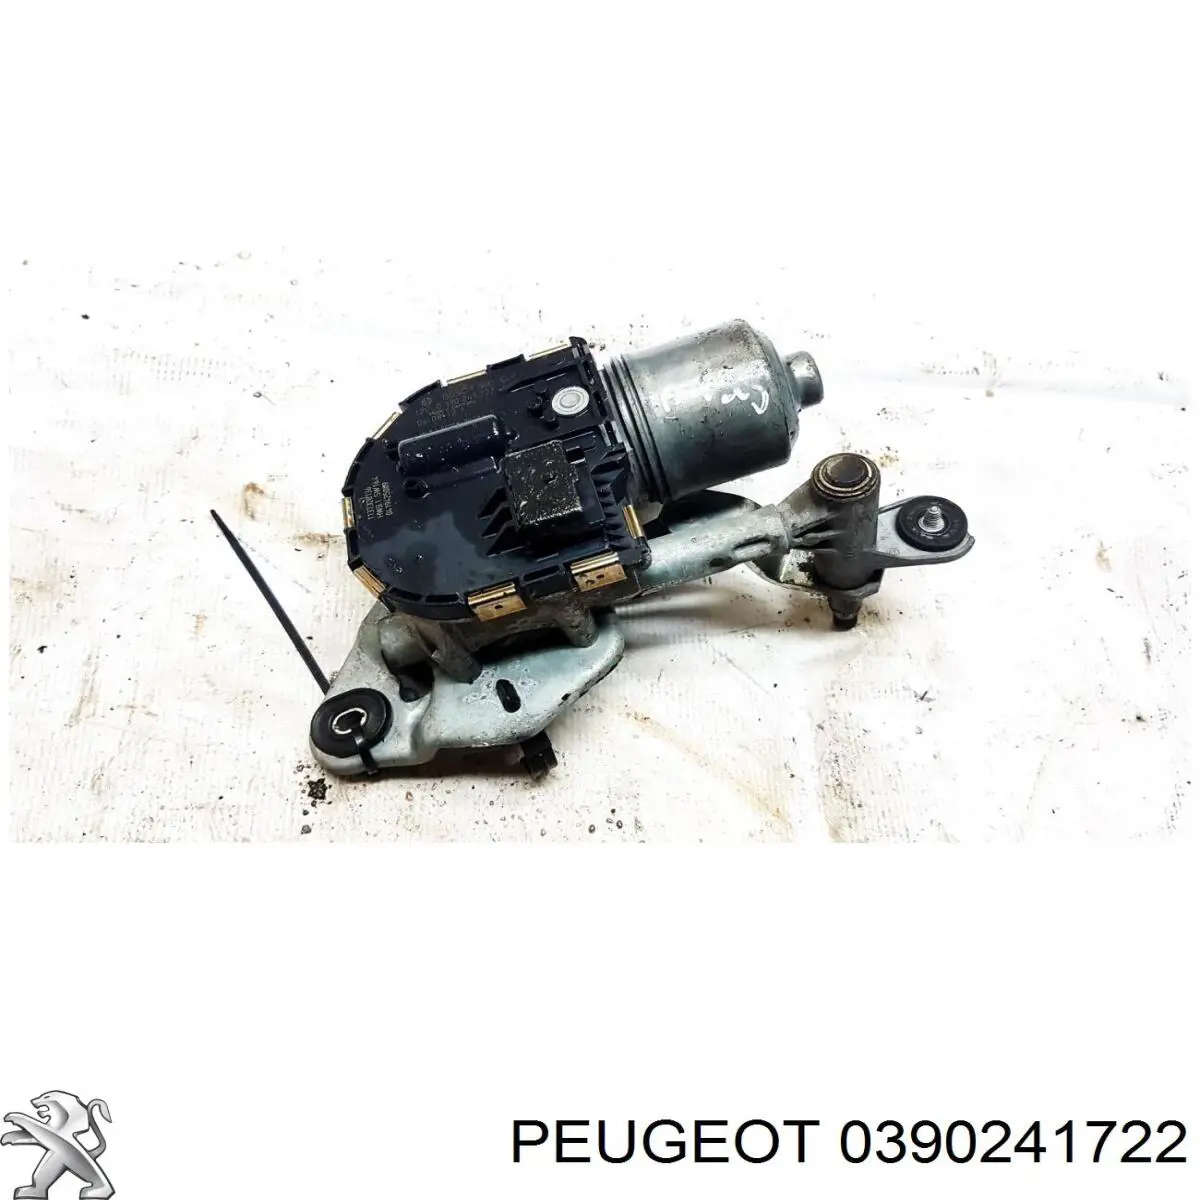 0390241722 Peugeot/Citroen motor del limpiaparabrisas del parabrisas